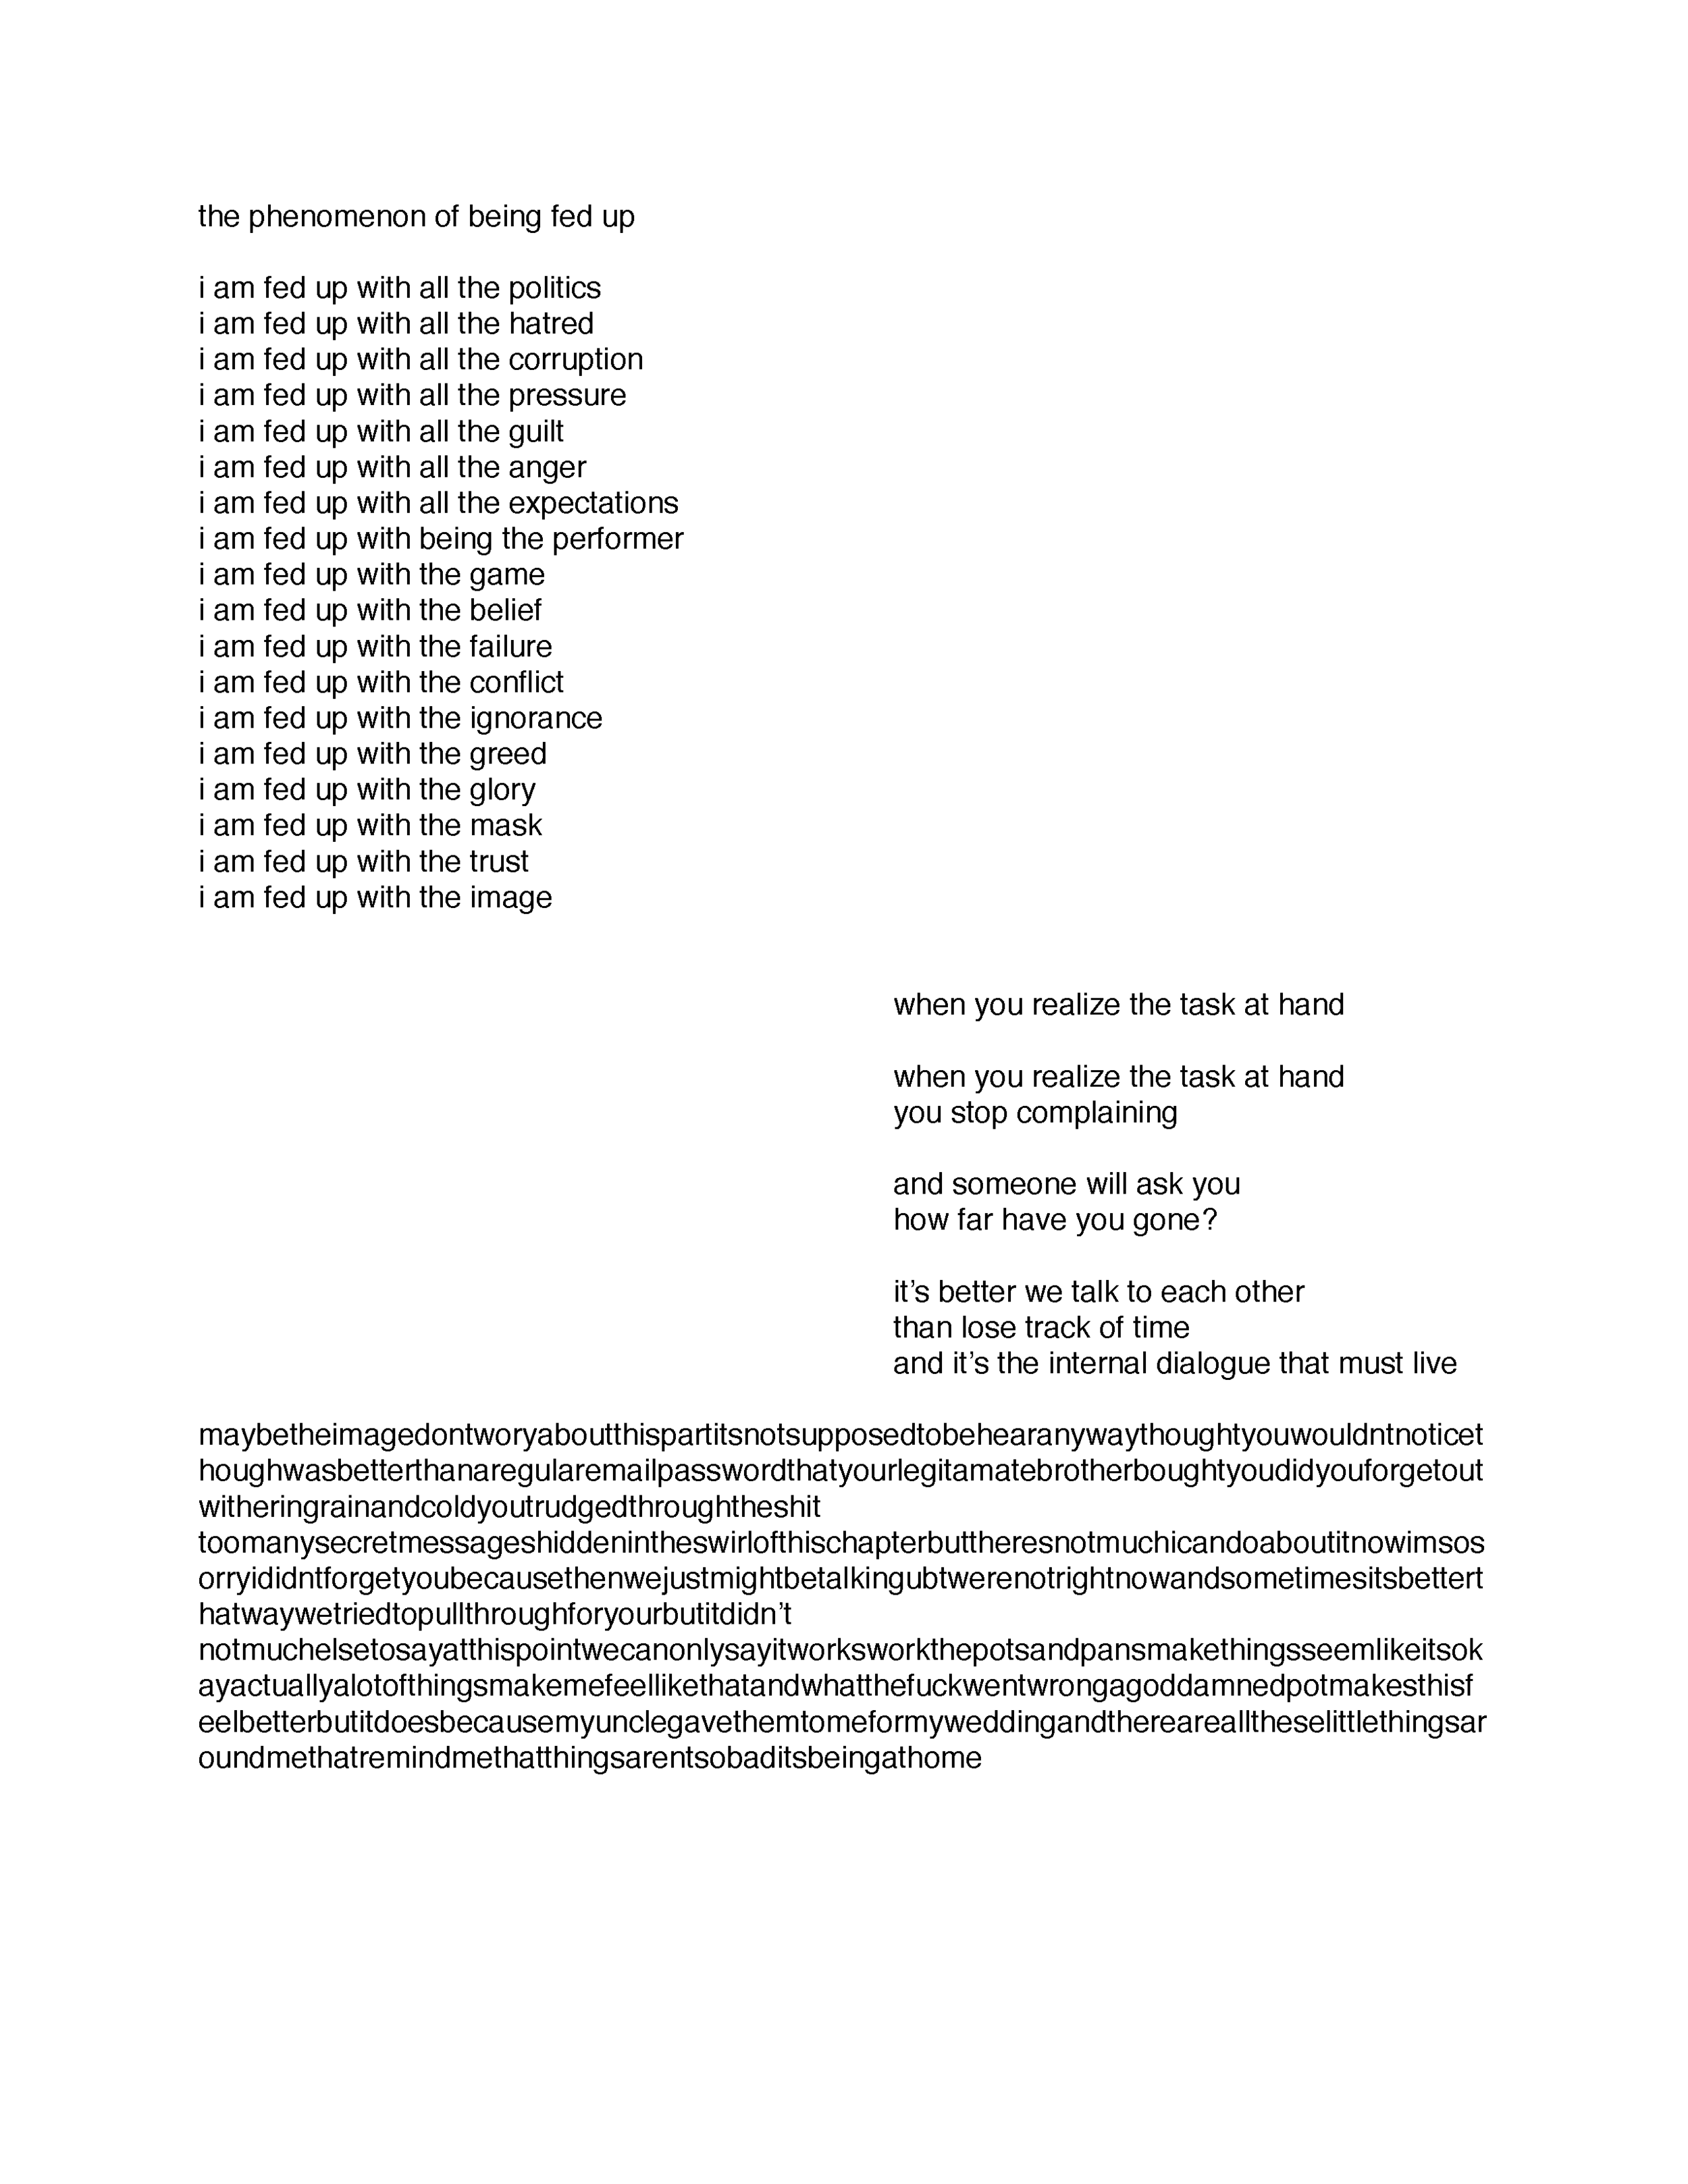 poem_Page_1.png